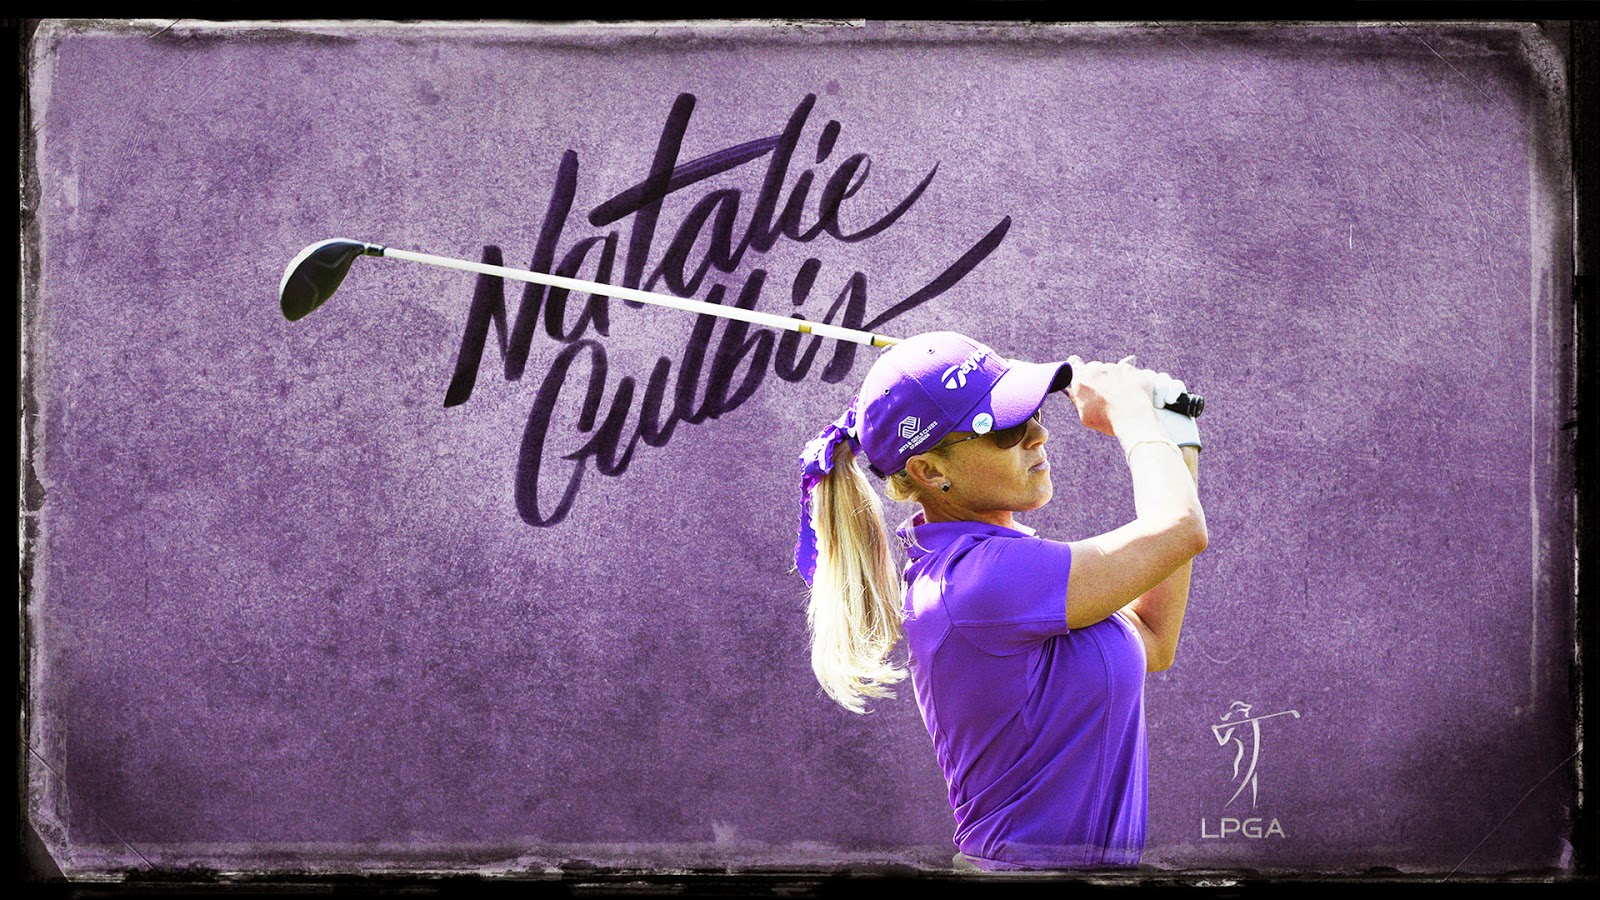 Natalie Gulbis LPGA Wallpaper 2014